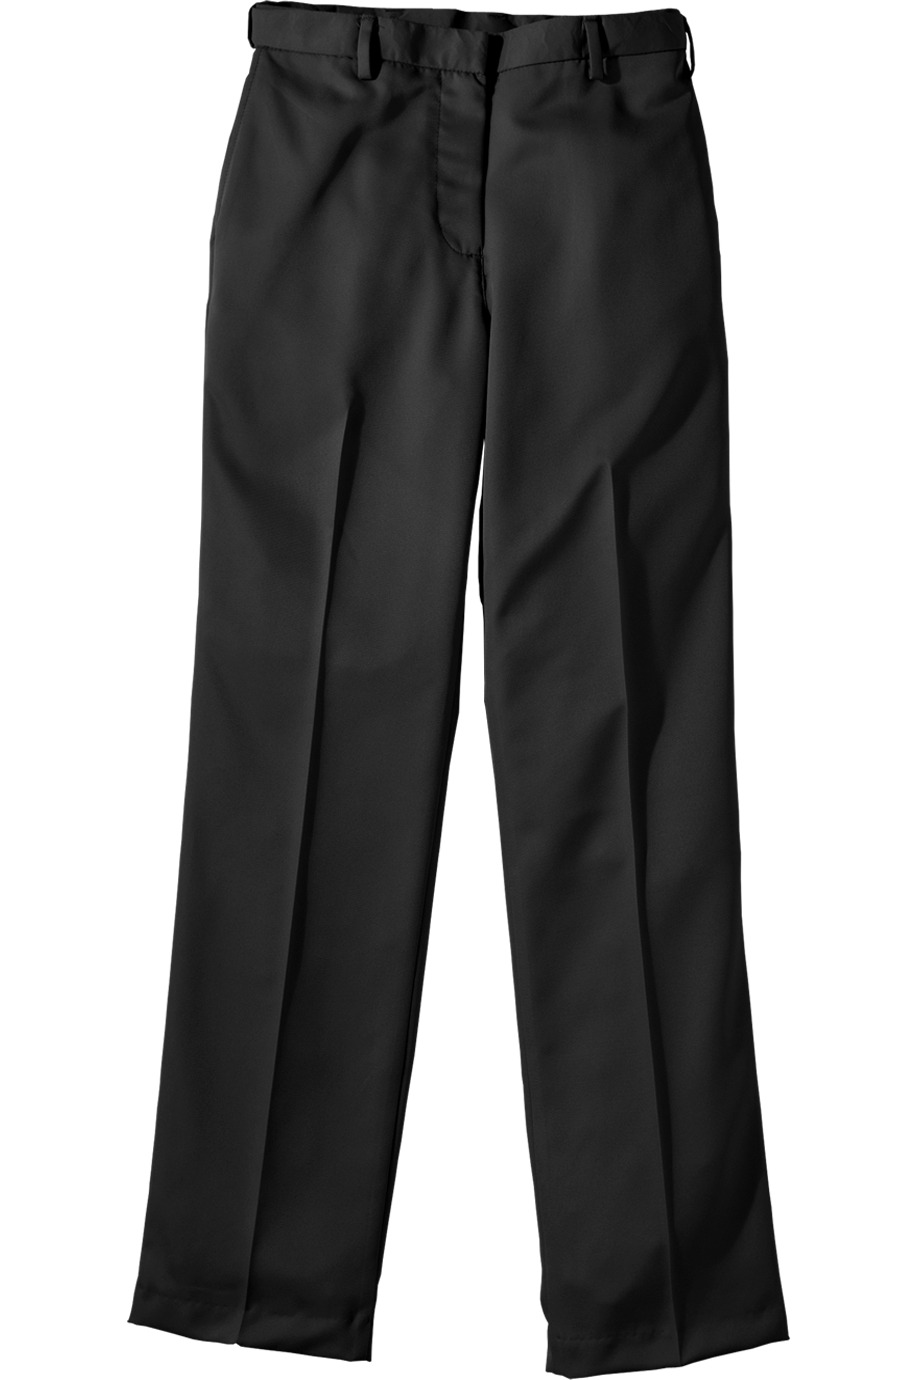 Edwards Garment 8572 - Women's Microfiber Easy Flat Front Pant